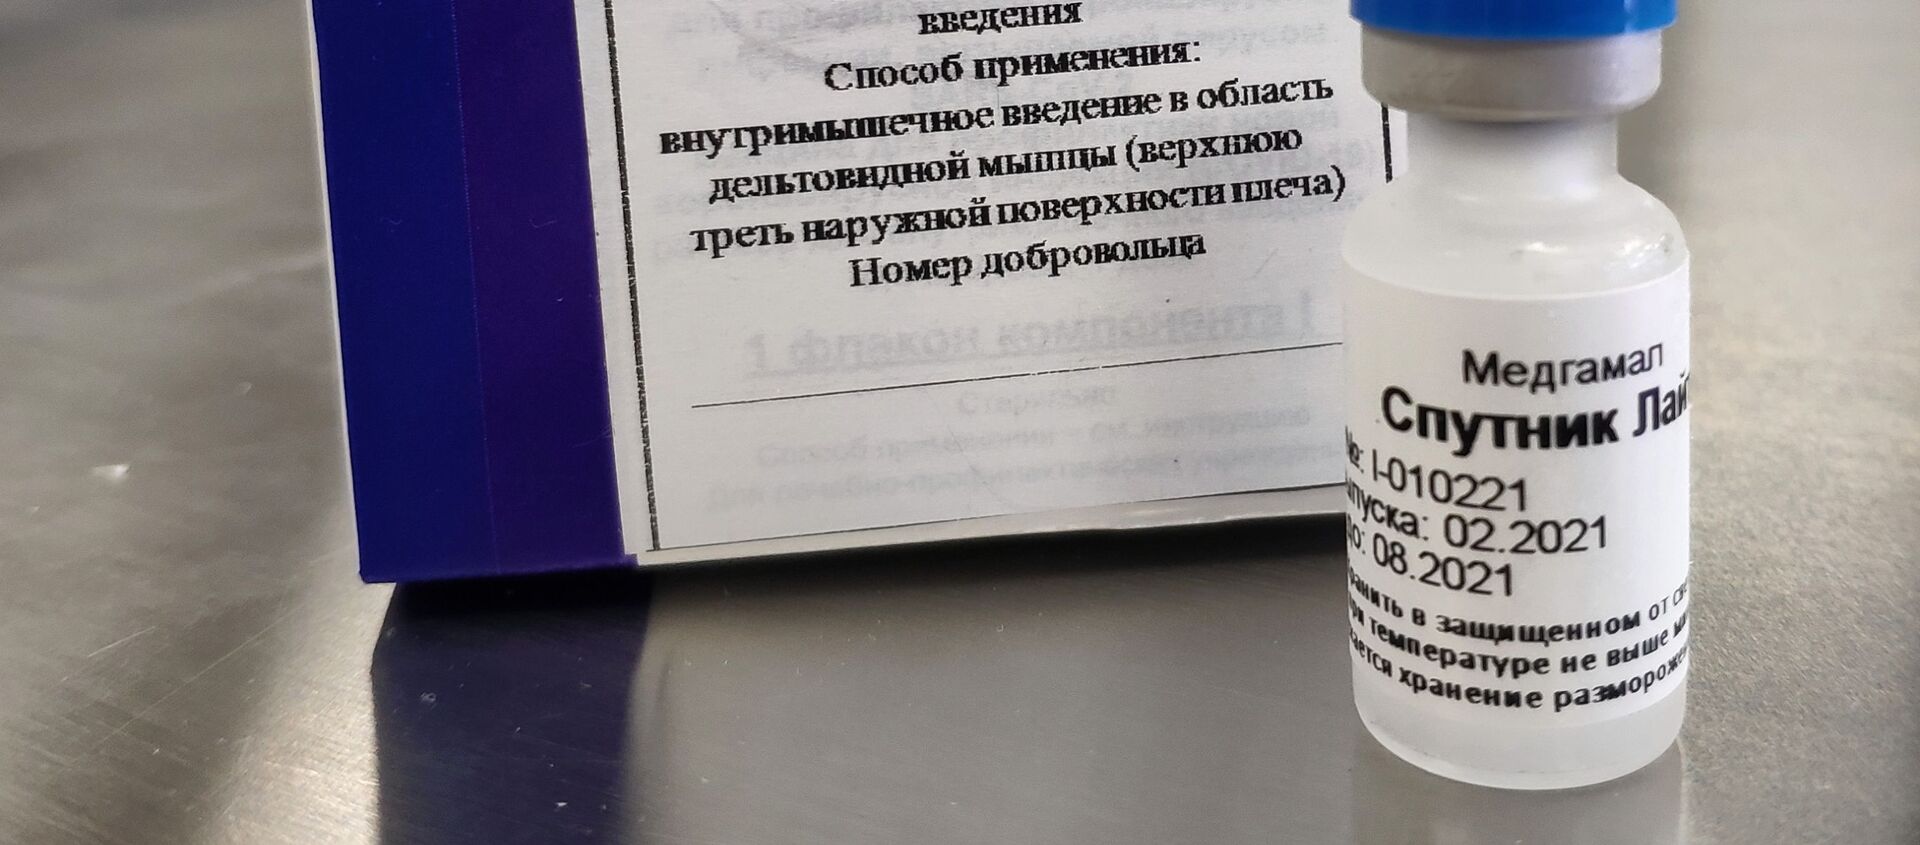 Упаковка однокомпонентной вакцины от COVID-19 Спутник Лайт - 俄罗斯卫星通讯社, 1920, 15.05.2021